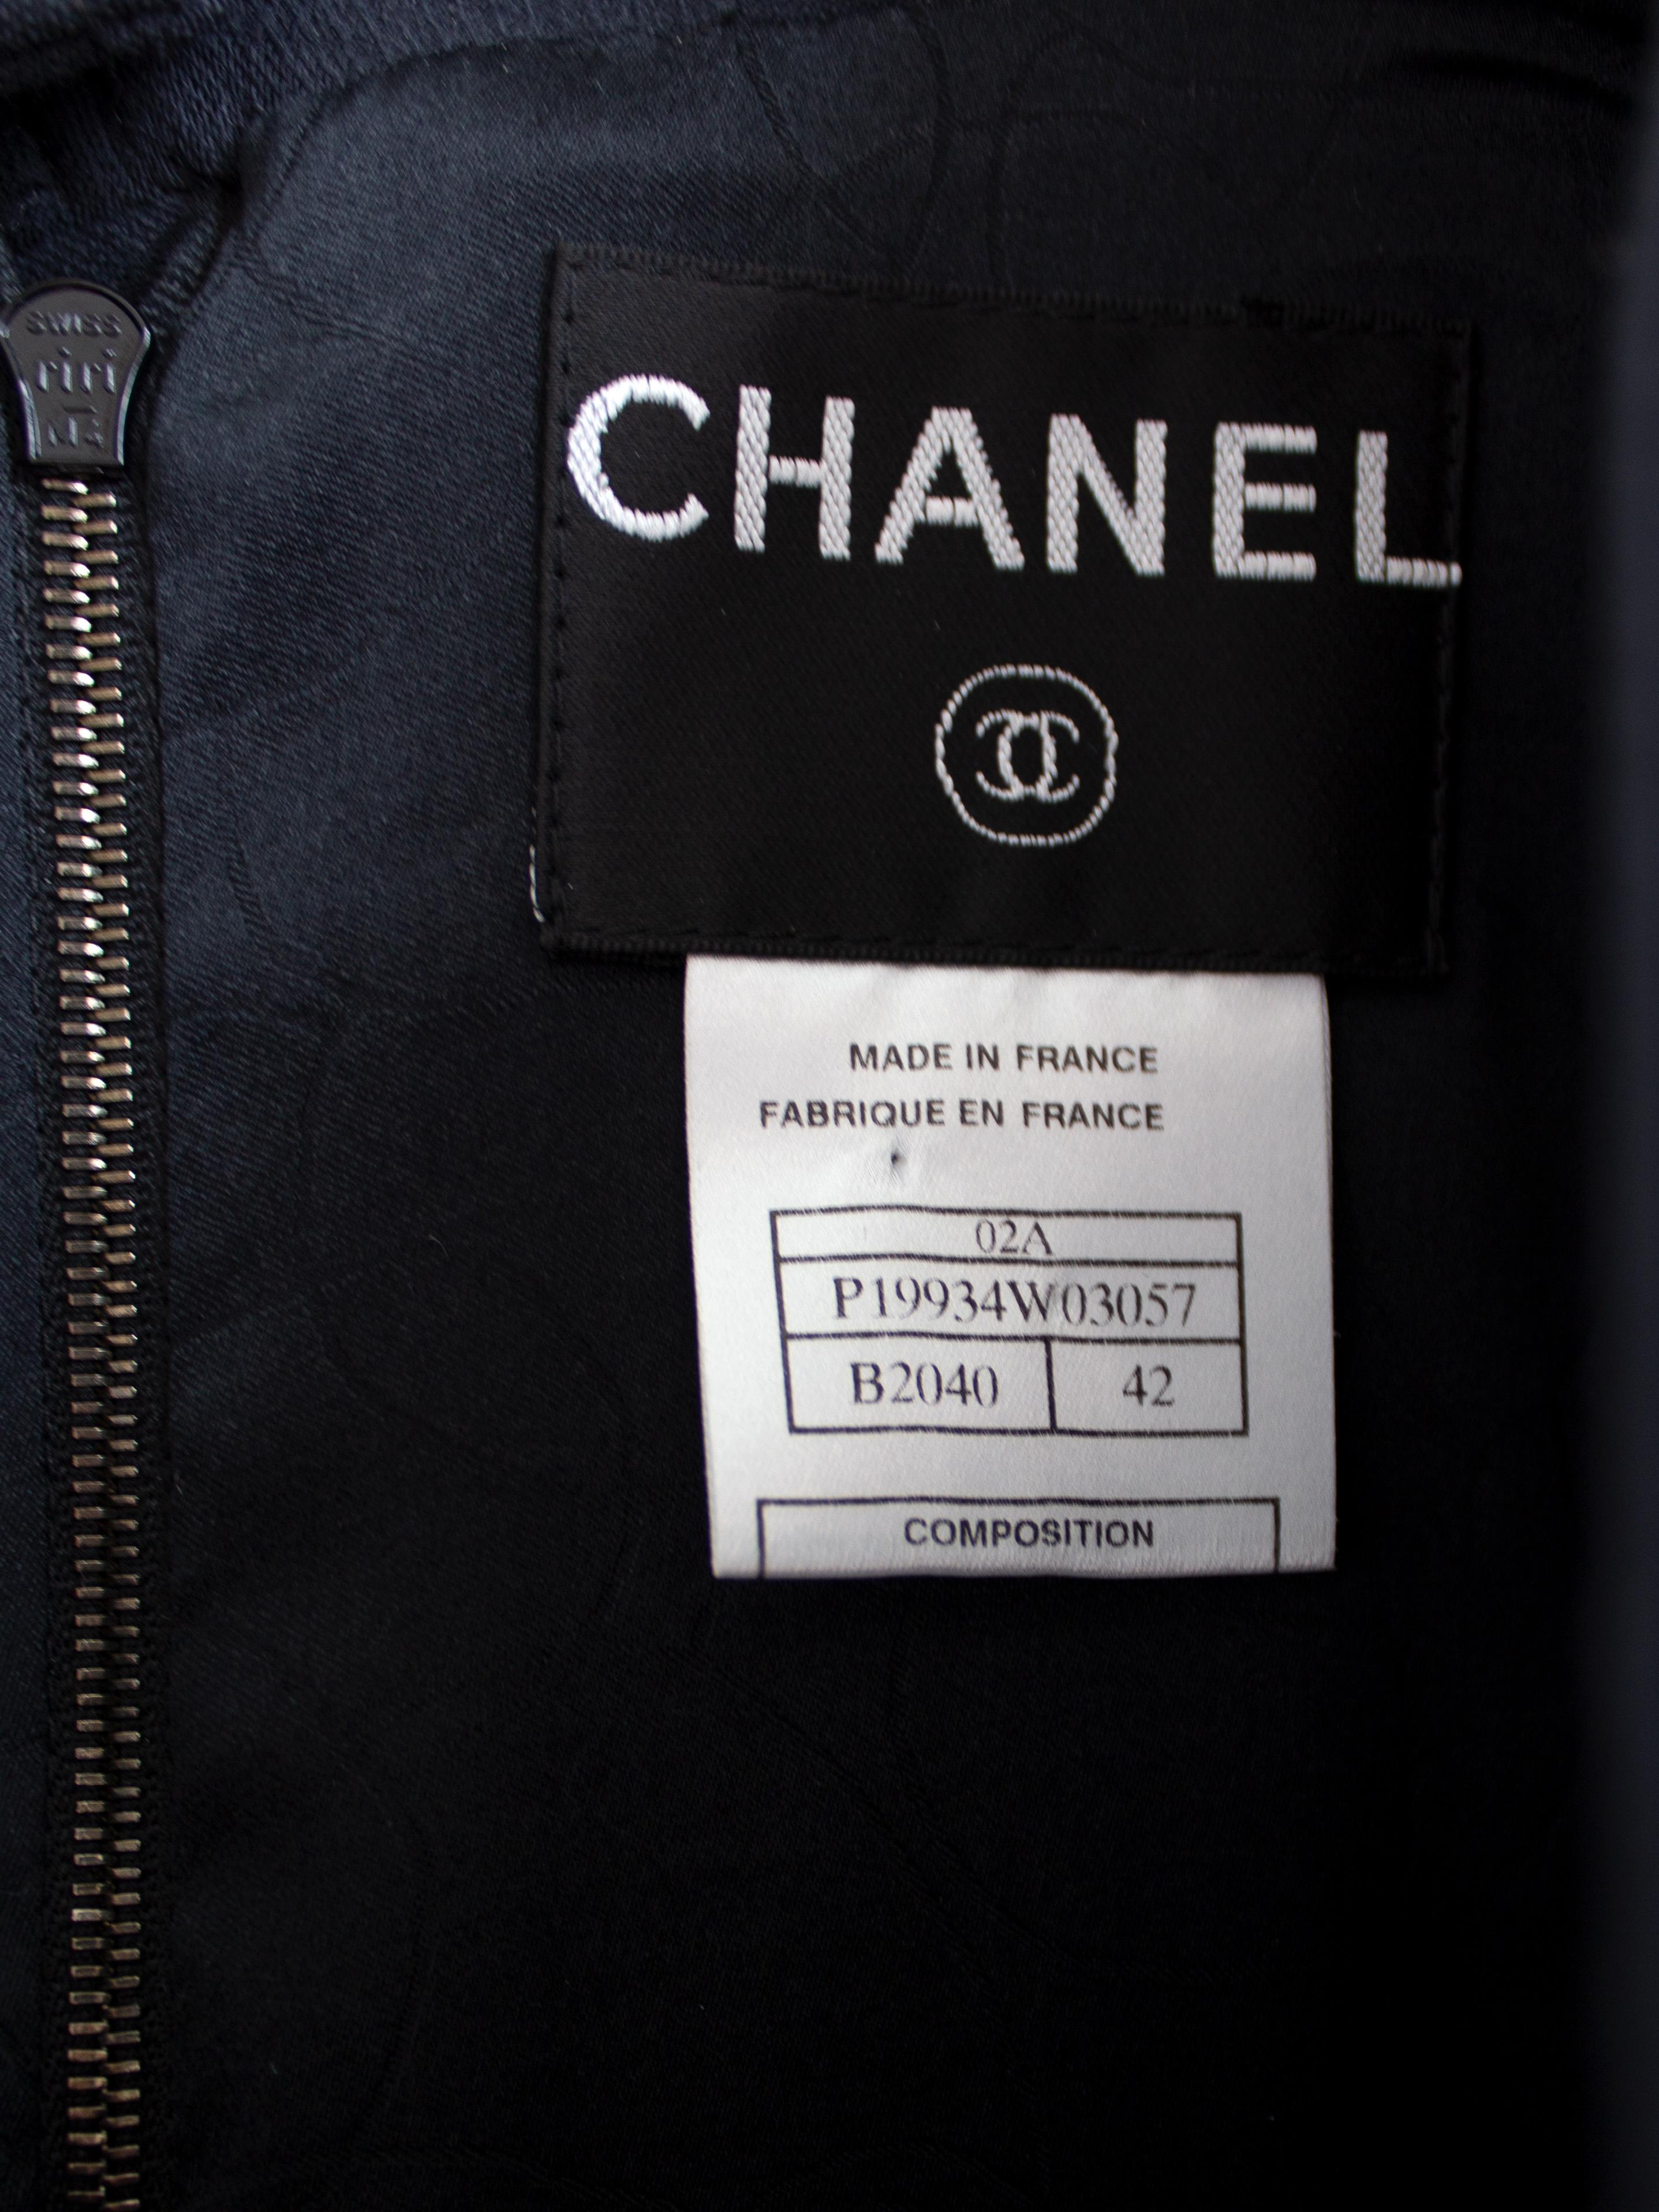 Chanel Vintage Fall 2002 Navy Blue Embellished Silver Crystal 02A Top Jacket For Sale 3